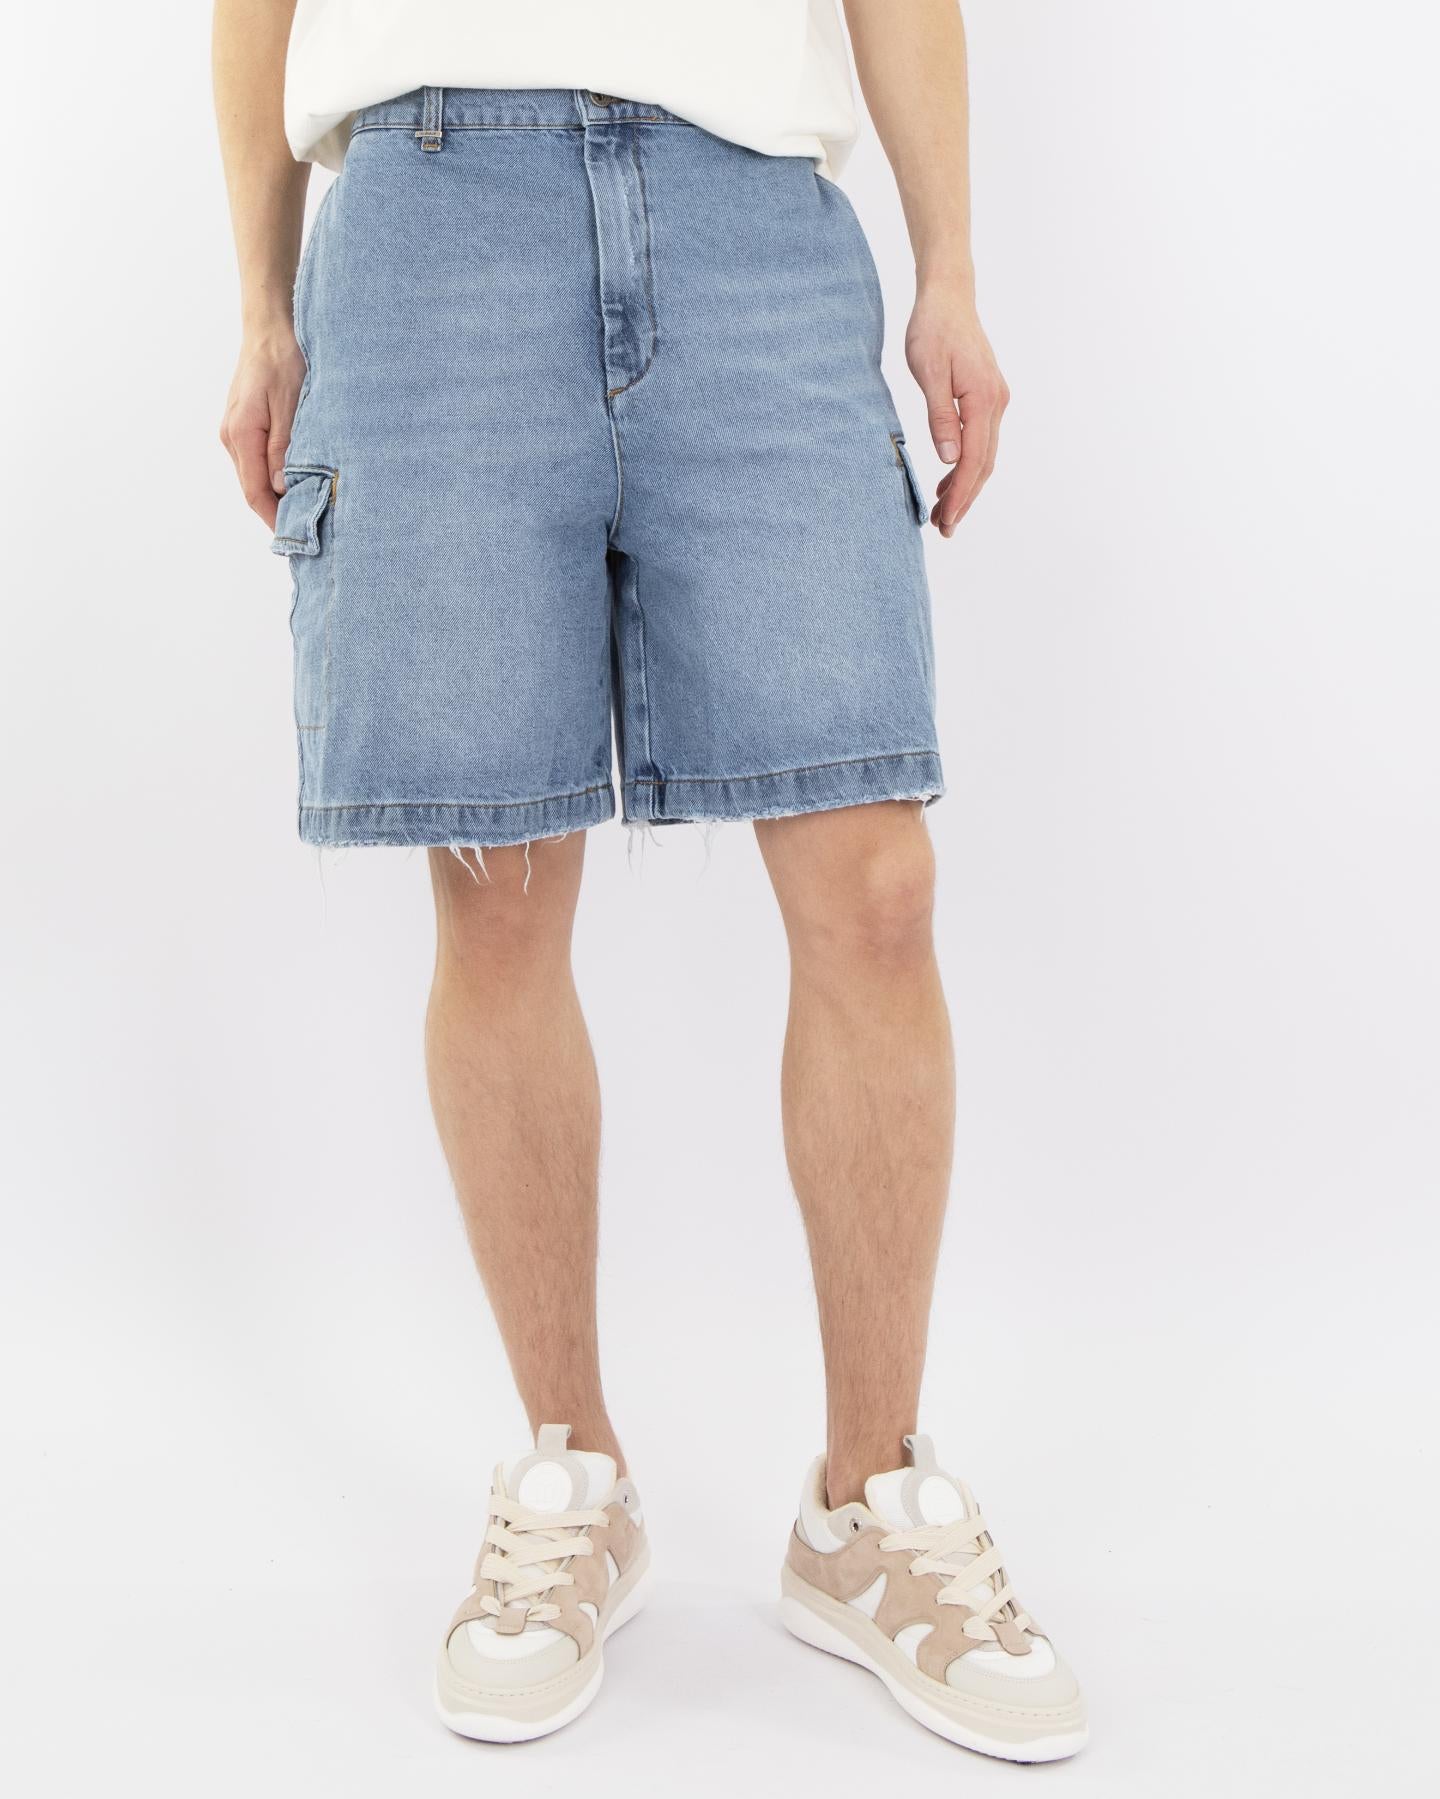 Men Cargo Shorts